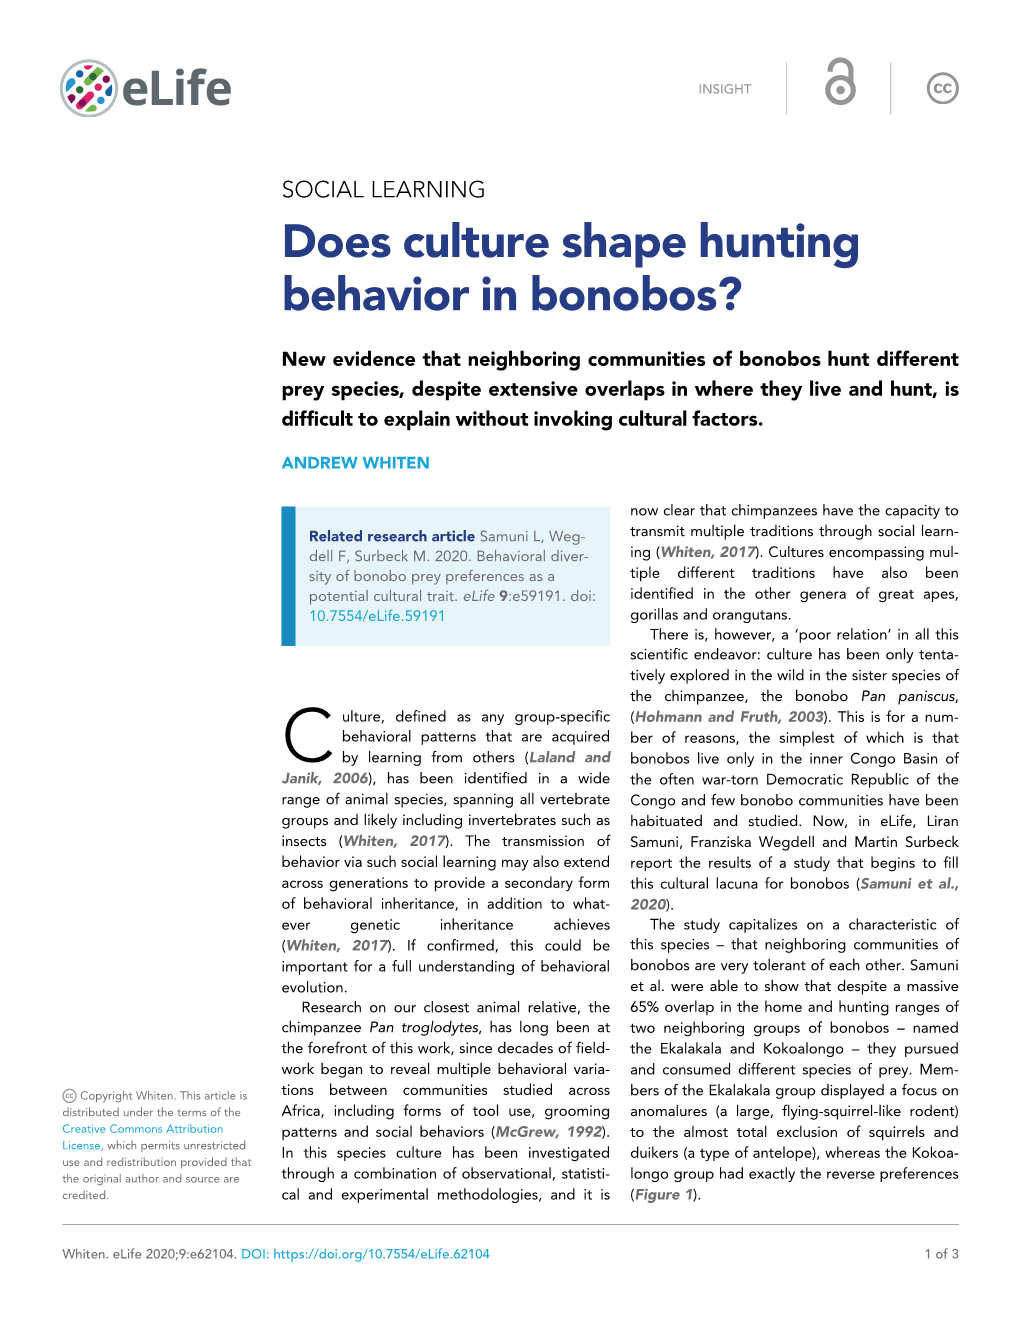 Does Culture Shape Hunting Behavior in Bonobos?